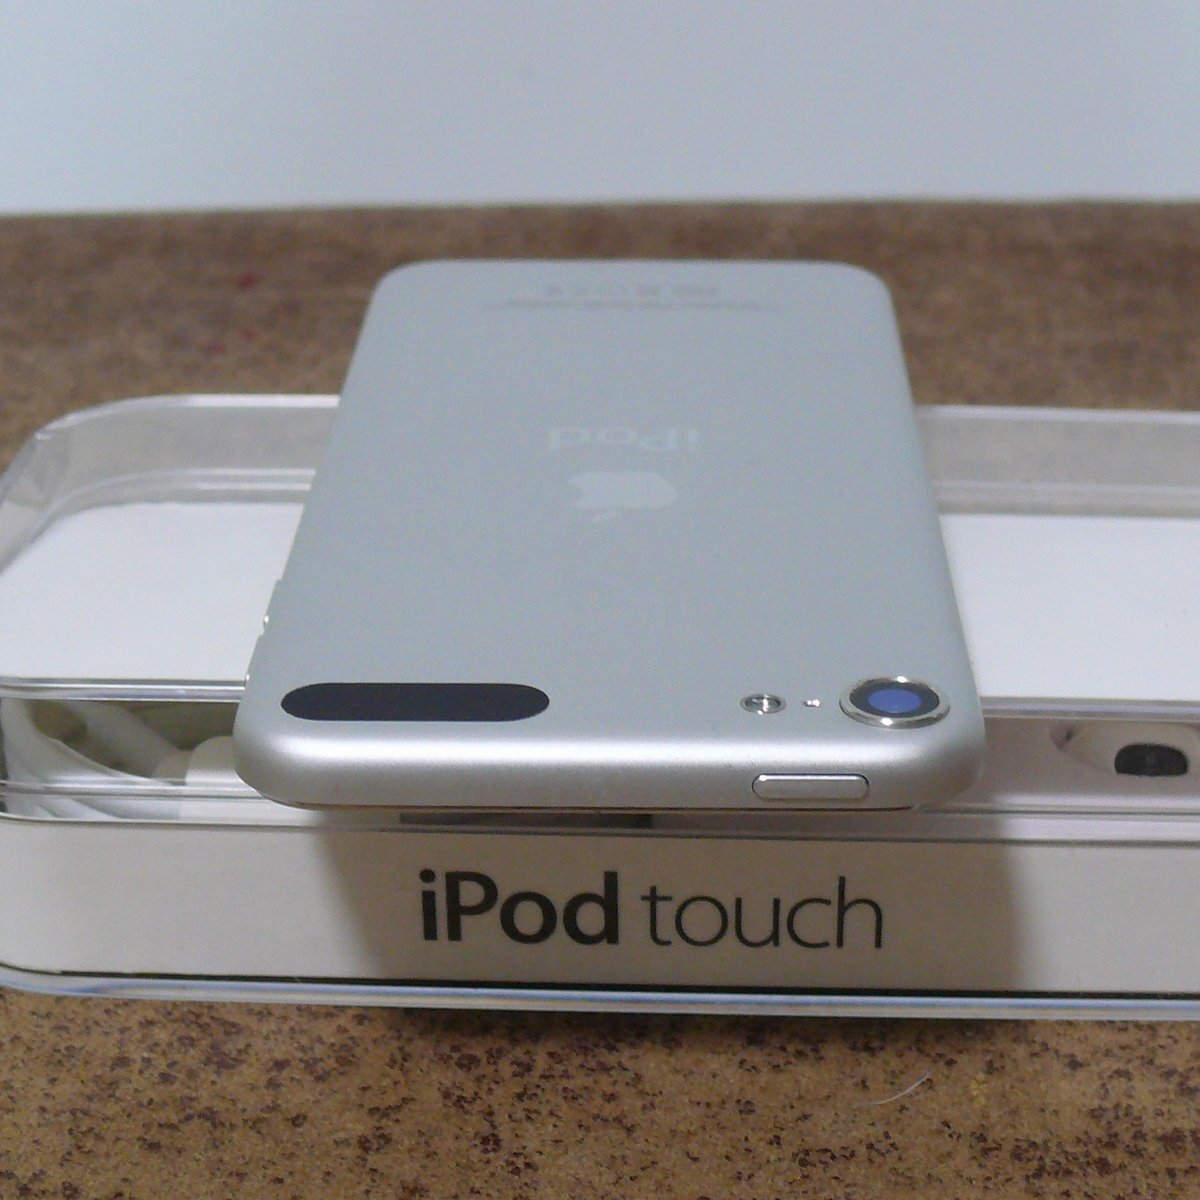 a256k☆Apple iPod touch 16GB シルバー☆wi-fi A1574 MKH42J/A☆初期化済☆付属品付き_画像6